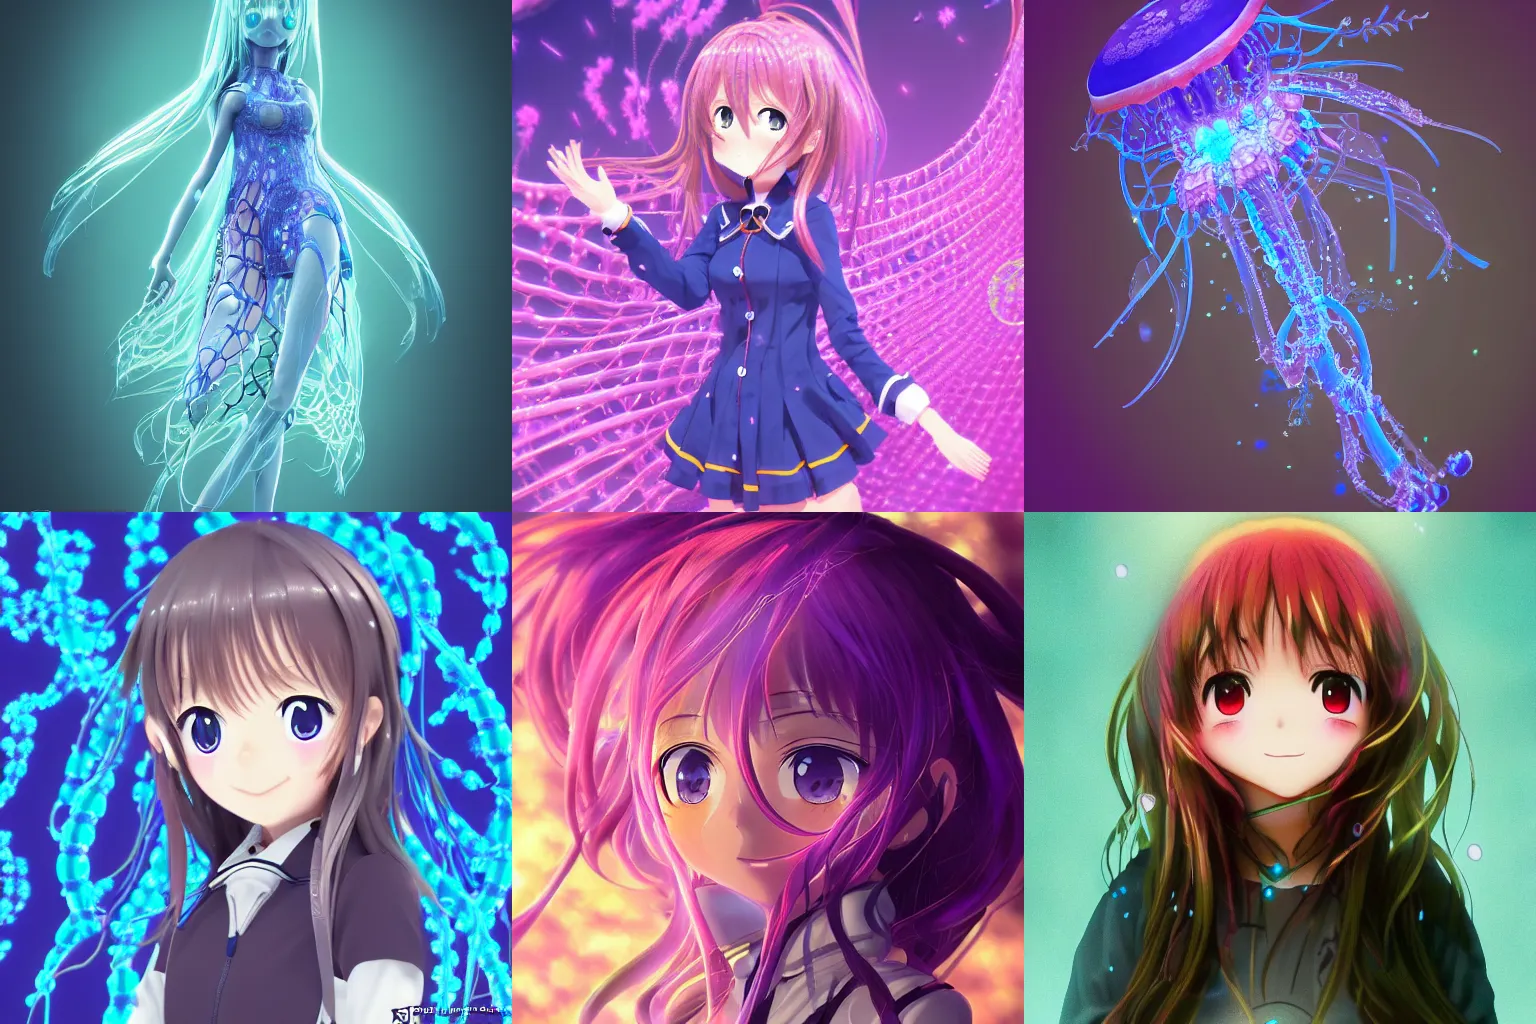 Prompt: intricate anime girl k-on kyoani, jellyfish bio-mechanical bio-luminescence, octane render, trending on artstation, hyper realism, 8k, fractals, pattern